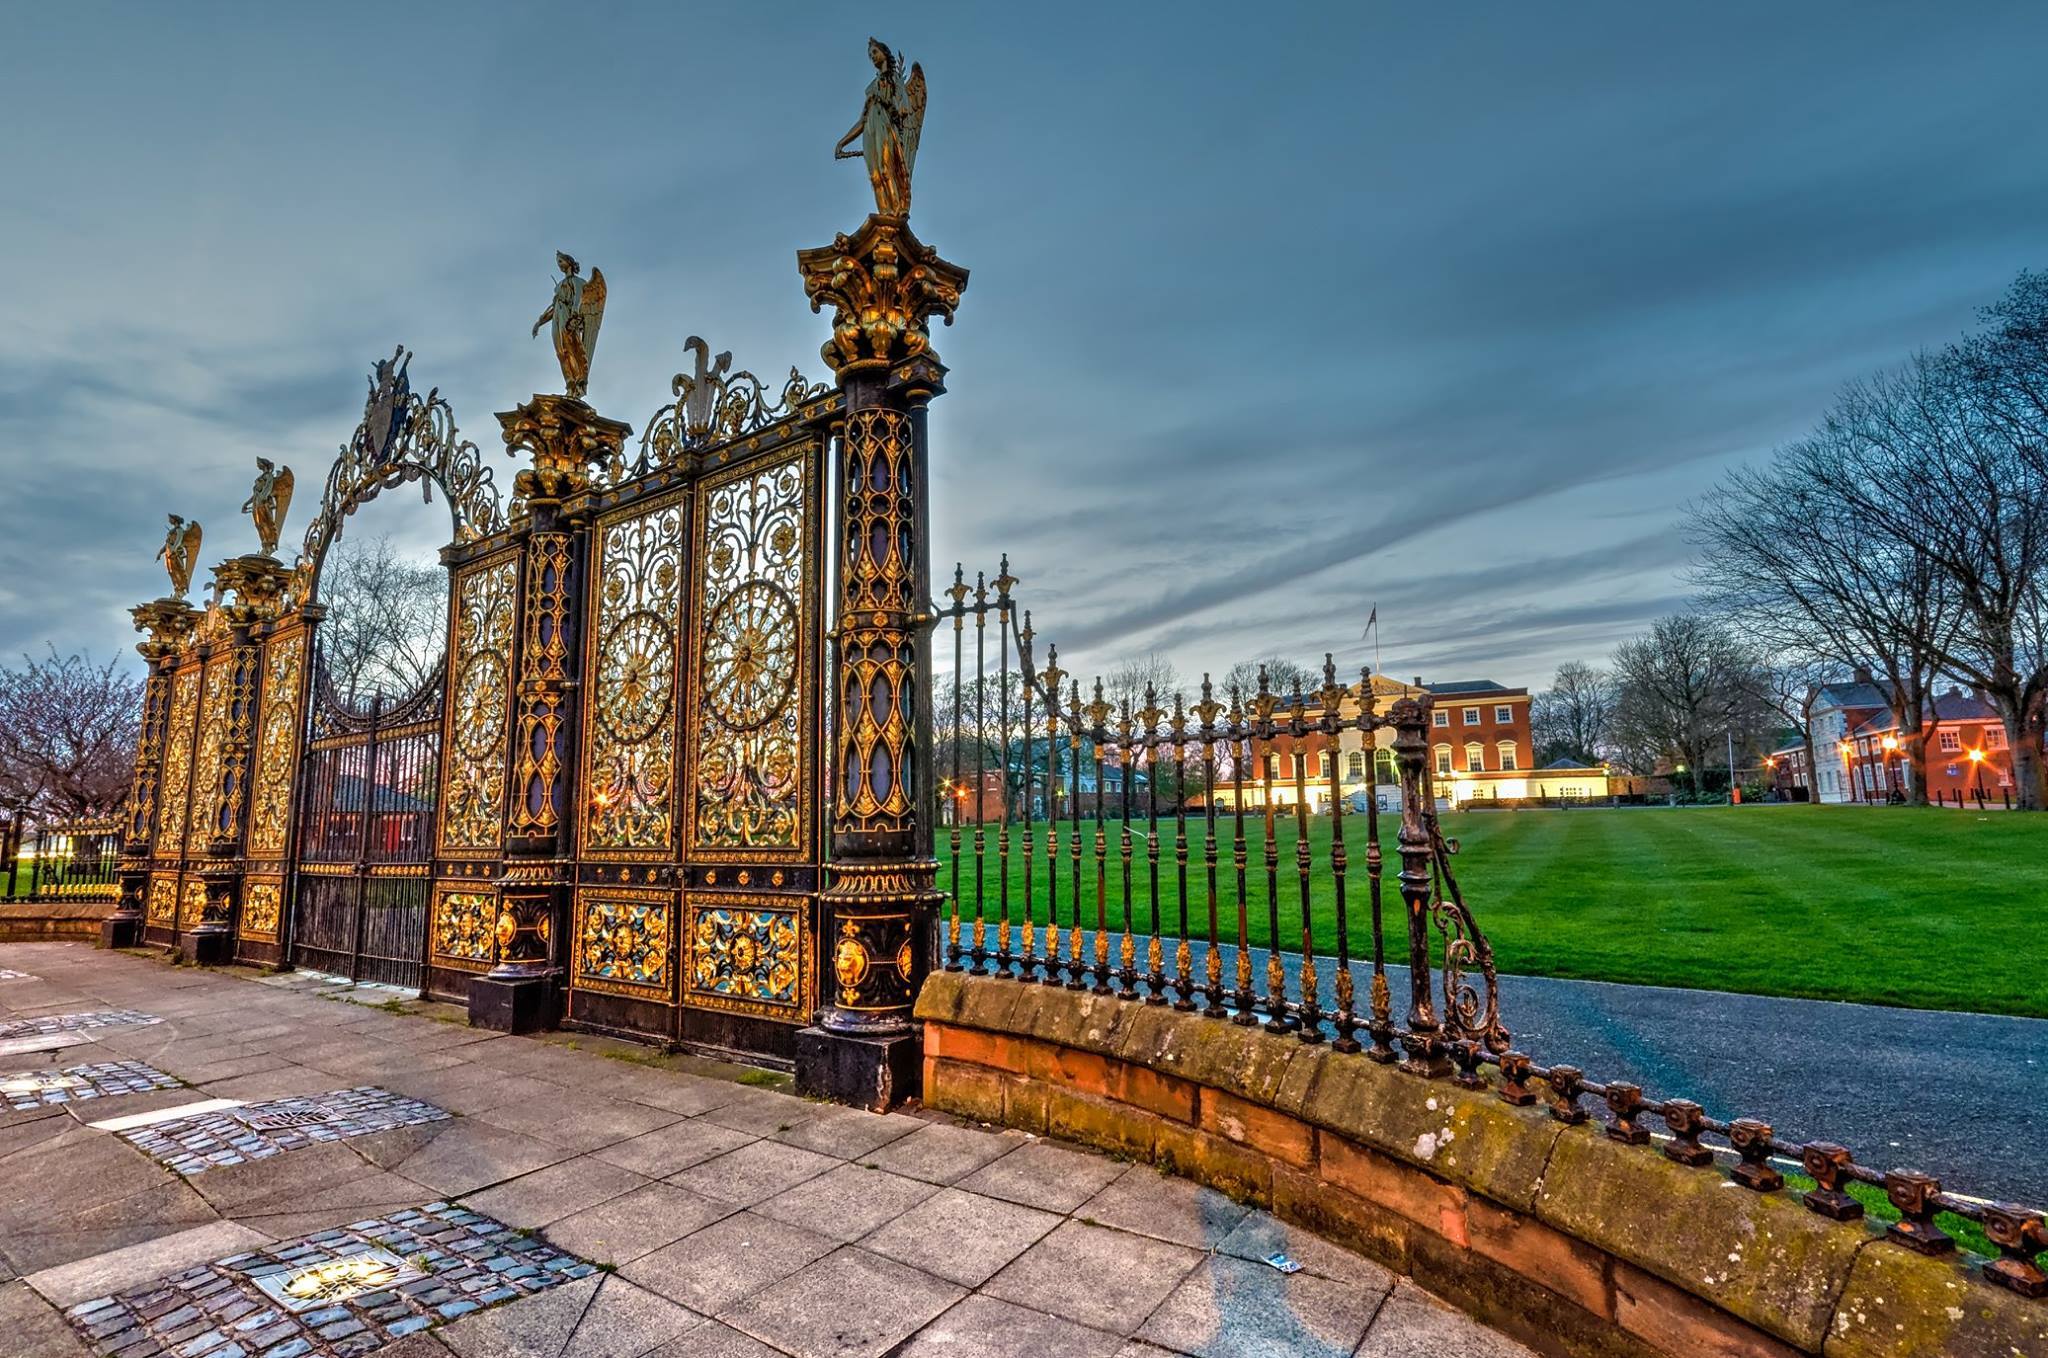 The Golden Gates in front of Warrington Town Hall (Sean Ansel Nolan)